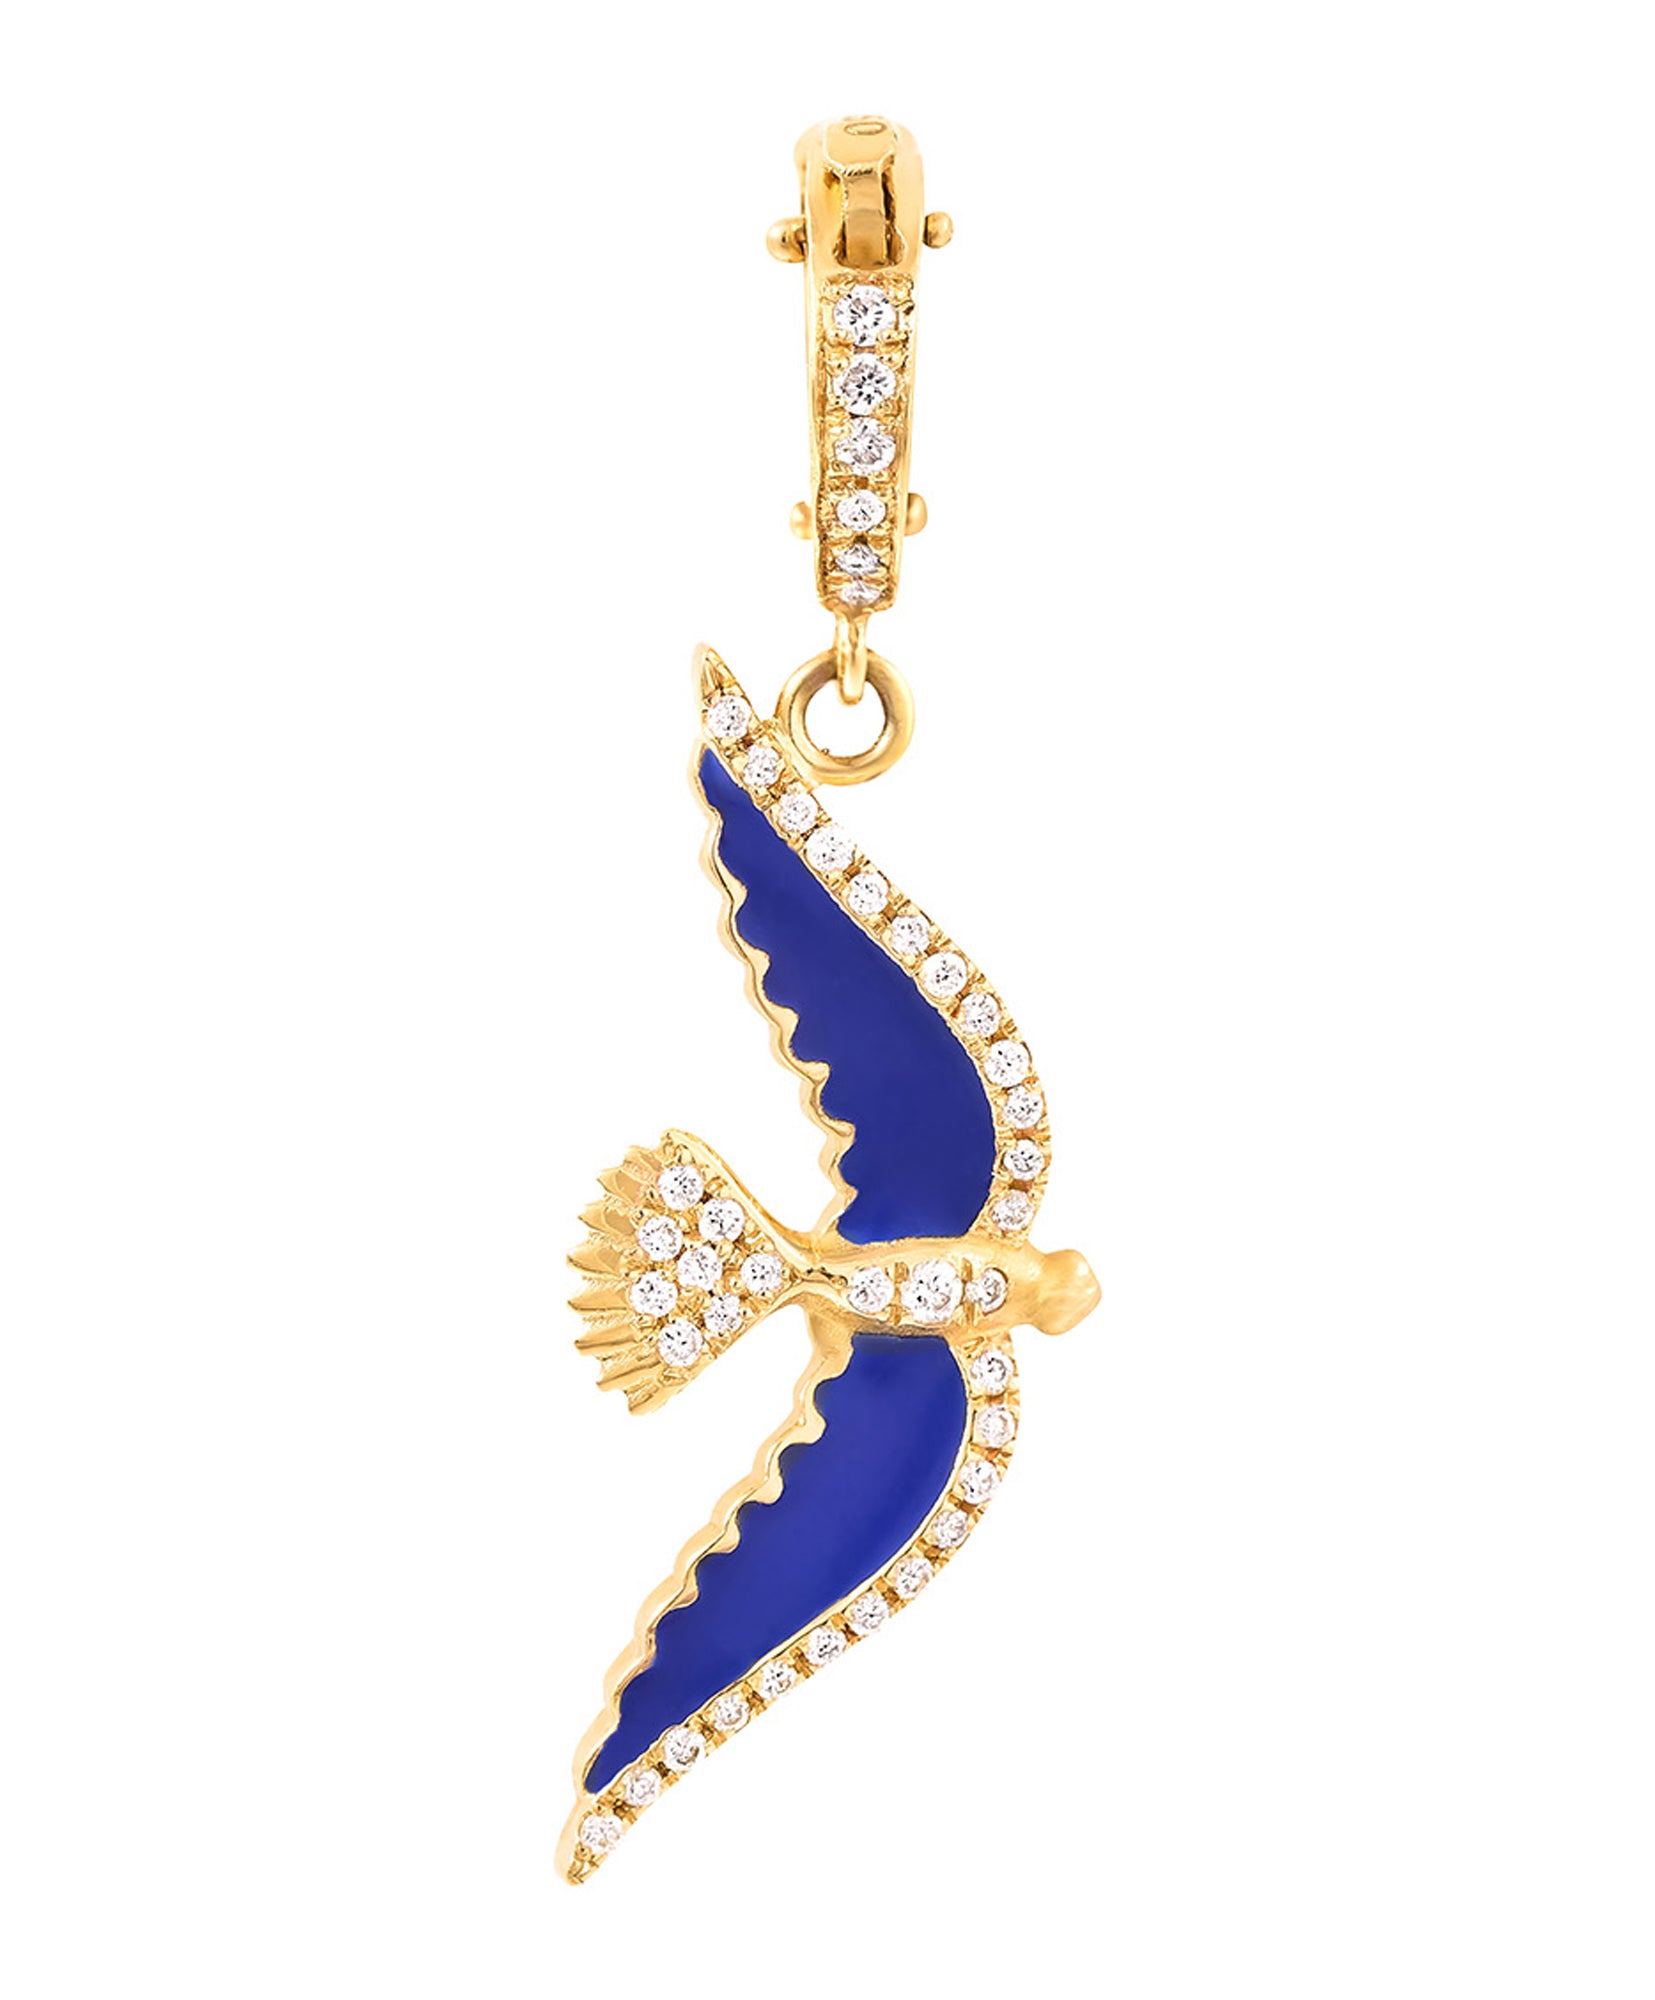  J by boghossian, white diamonds, gold, charm, pendant, bird, navy blue enamel